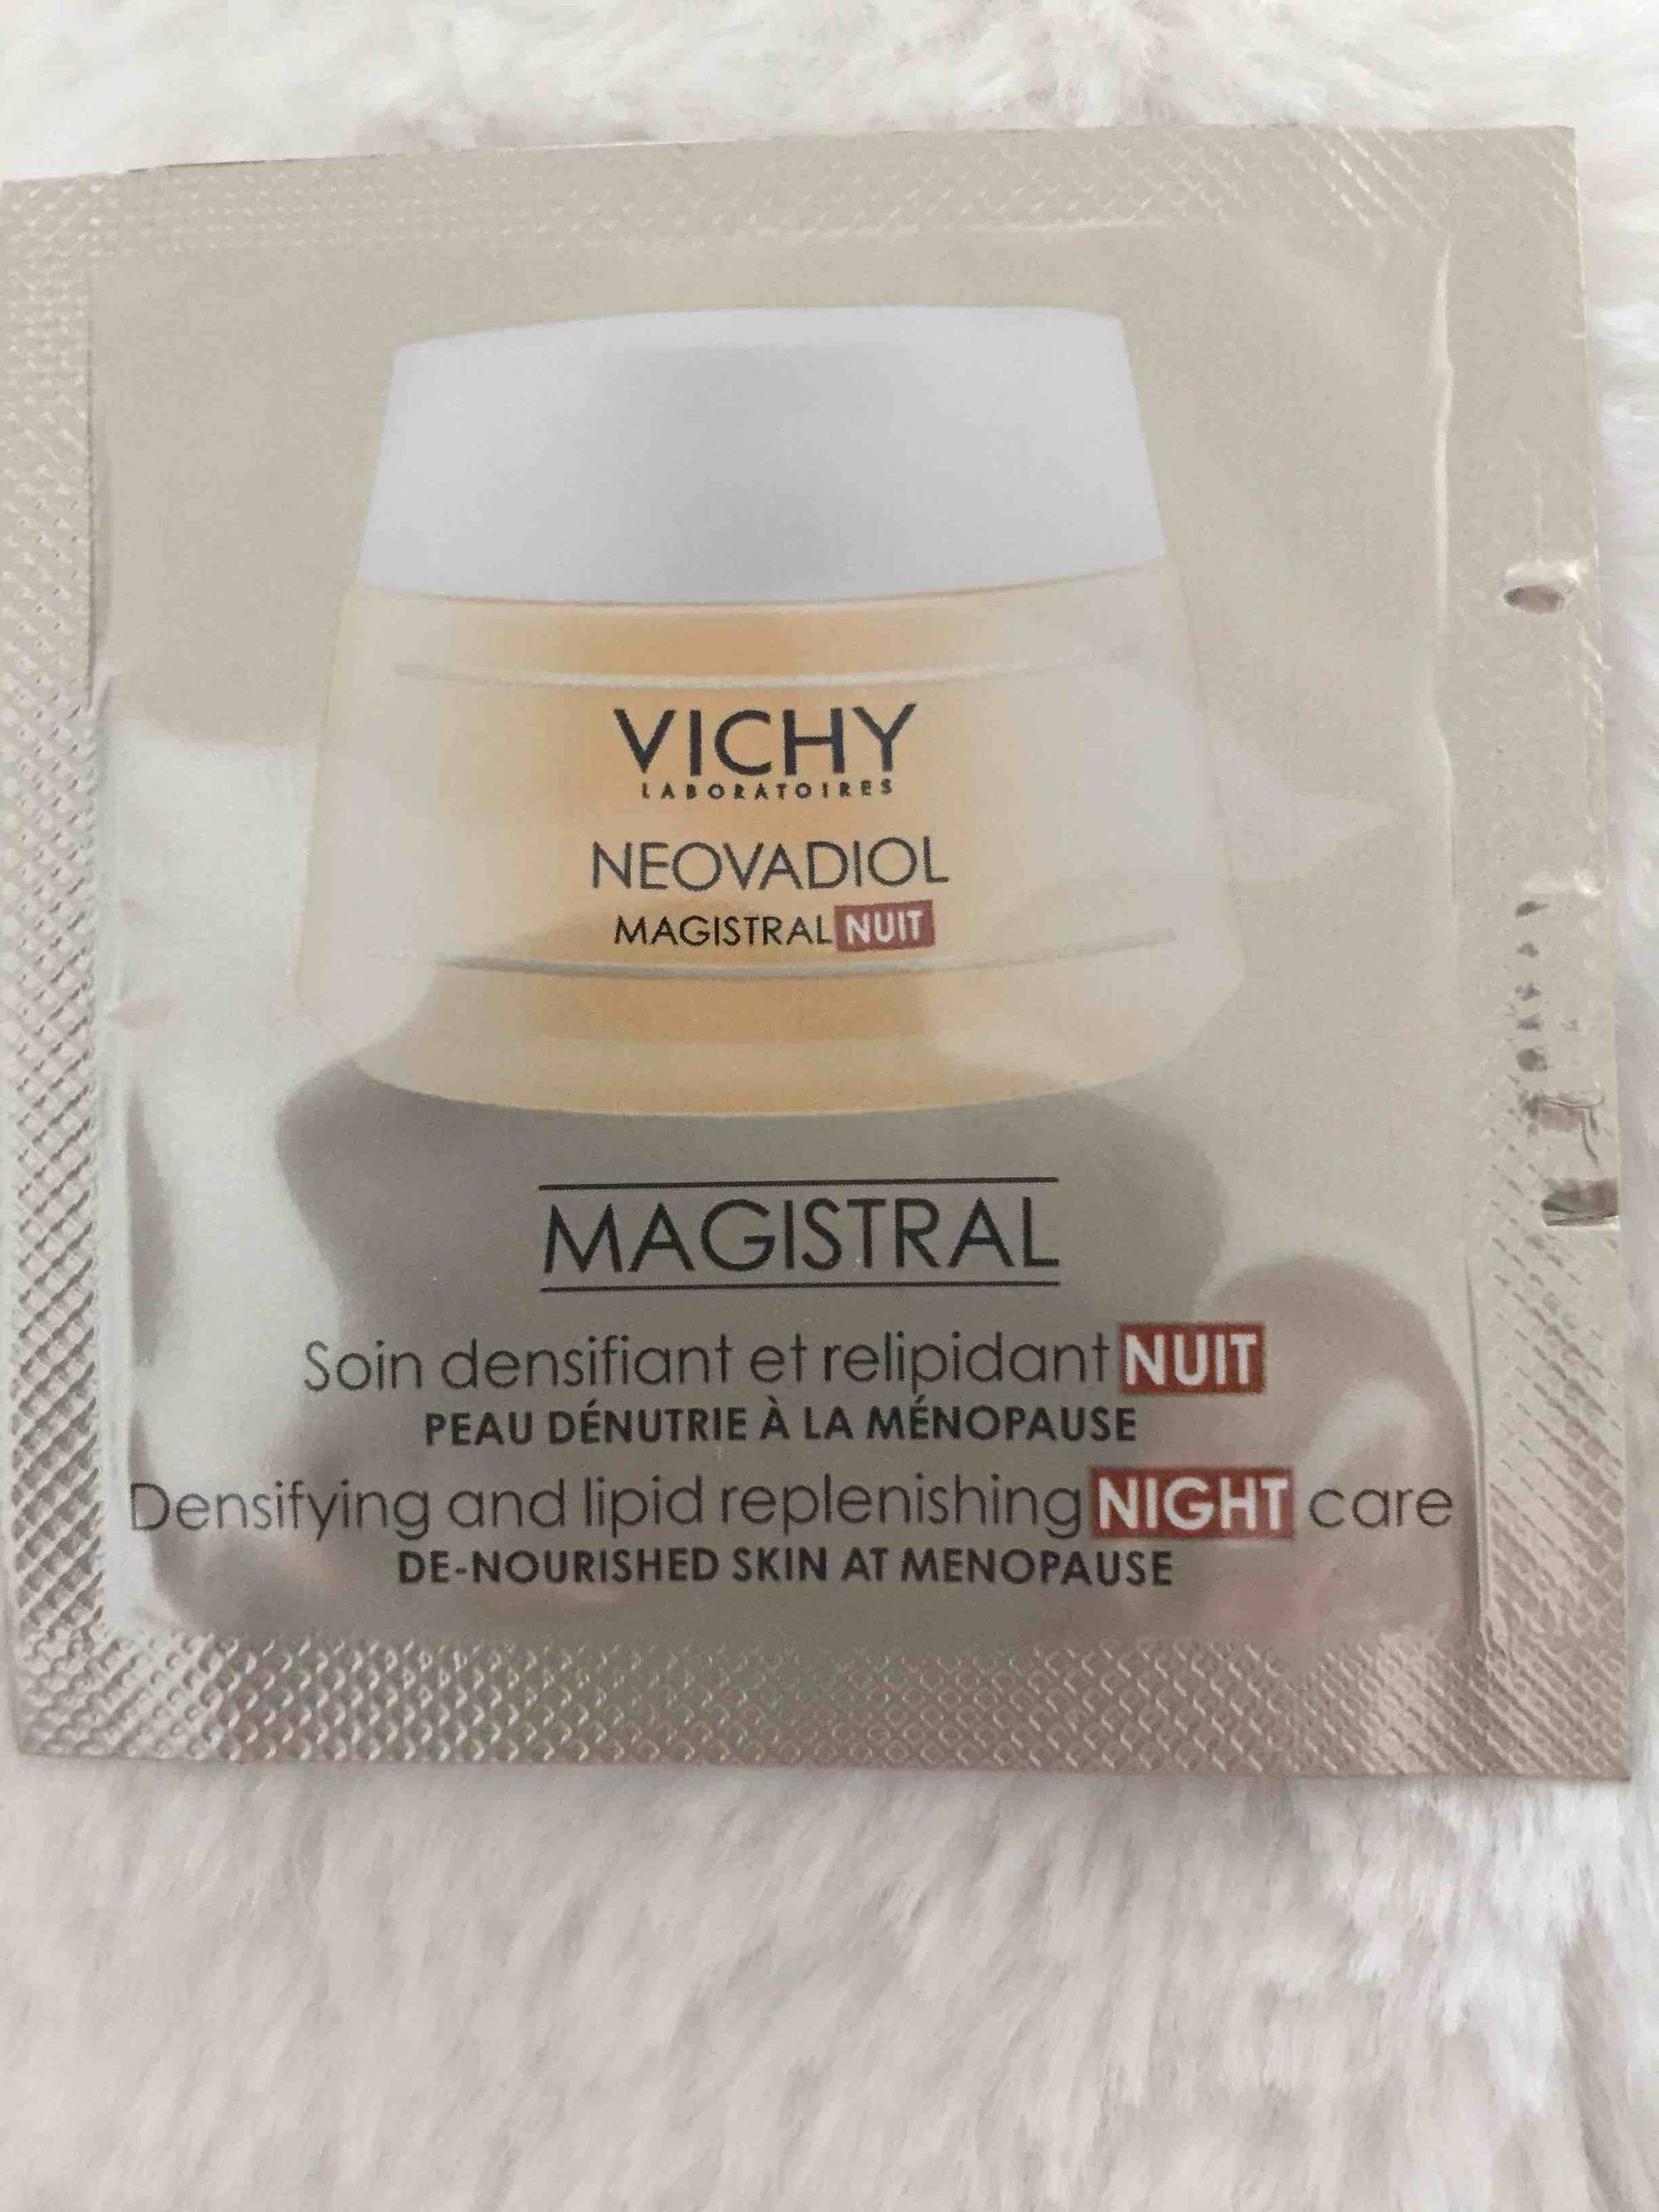 VICHY - Neovadiol magistral - Soin densifiant et relipidant nuit